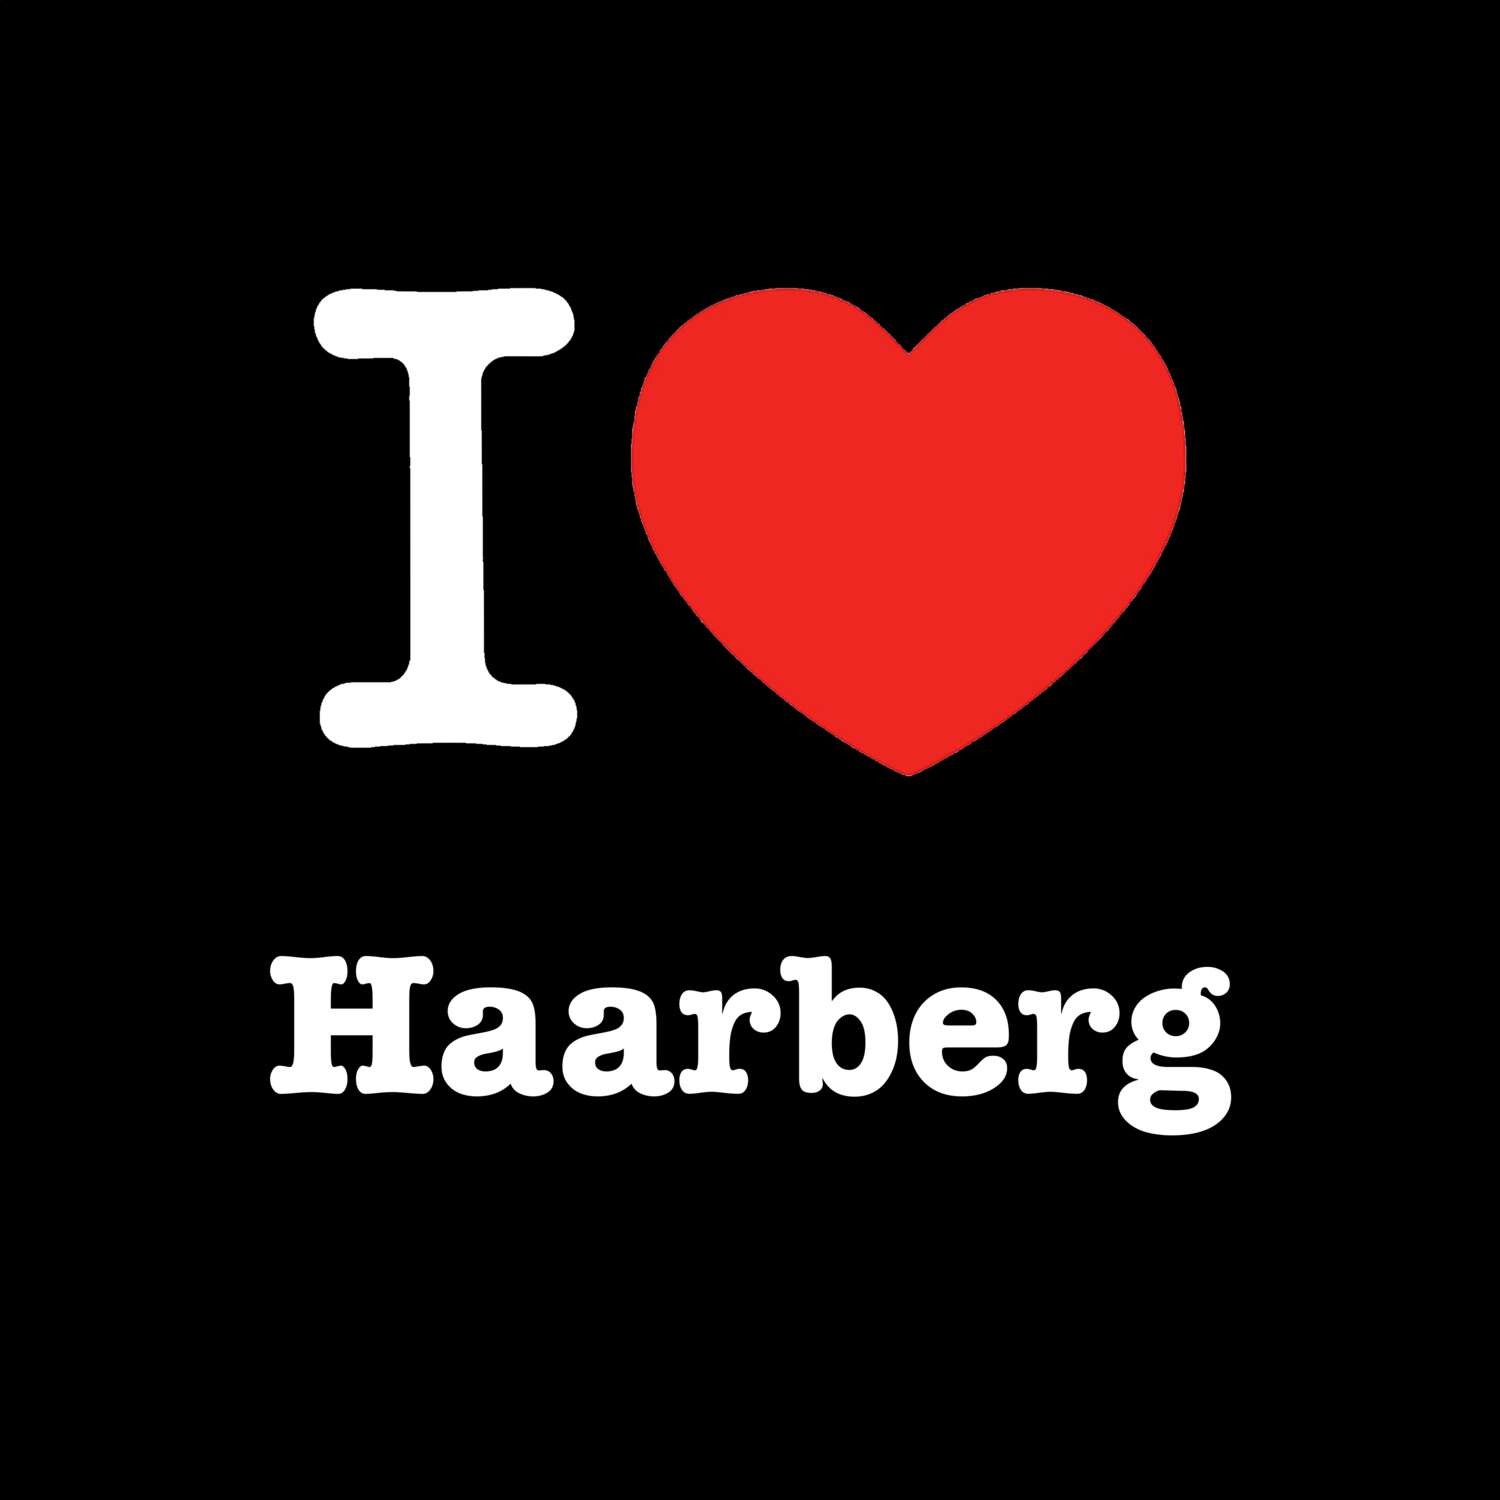 Haarberg T-Shirt »I love«